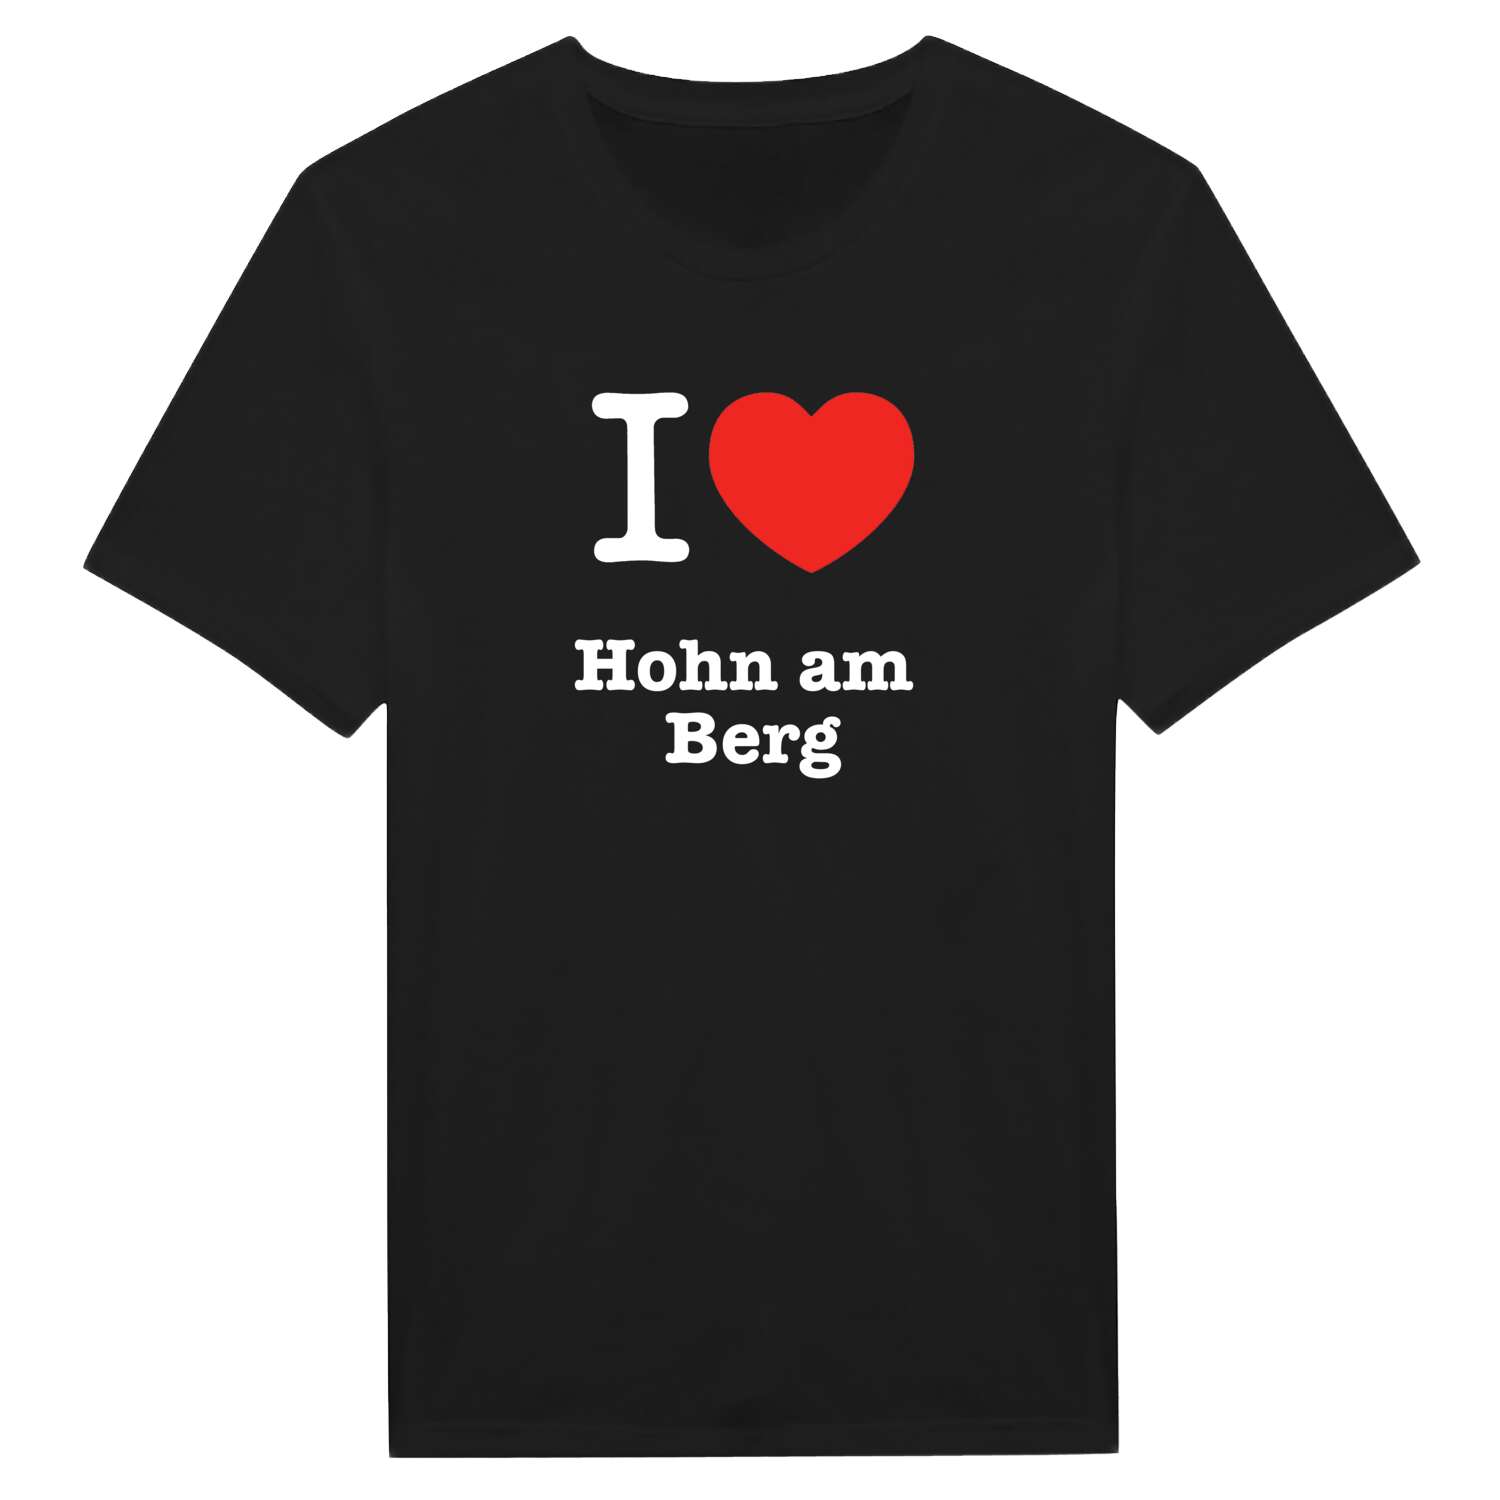 Hohn am Berg T-Shirt »I love«